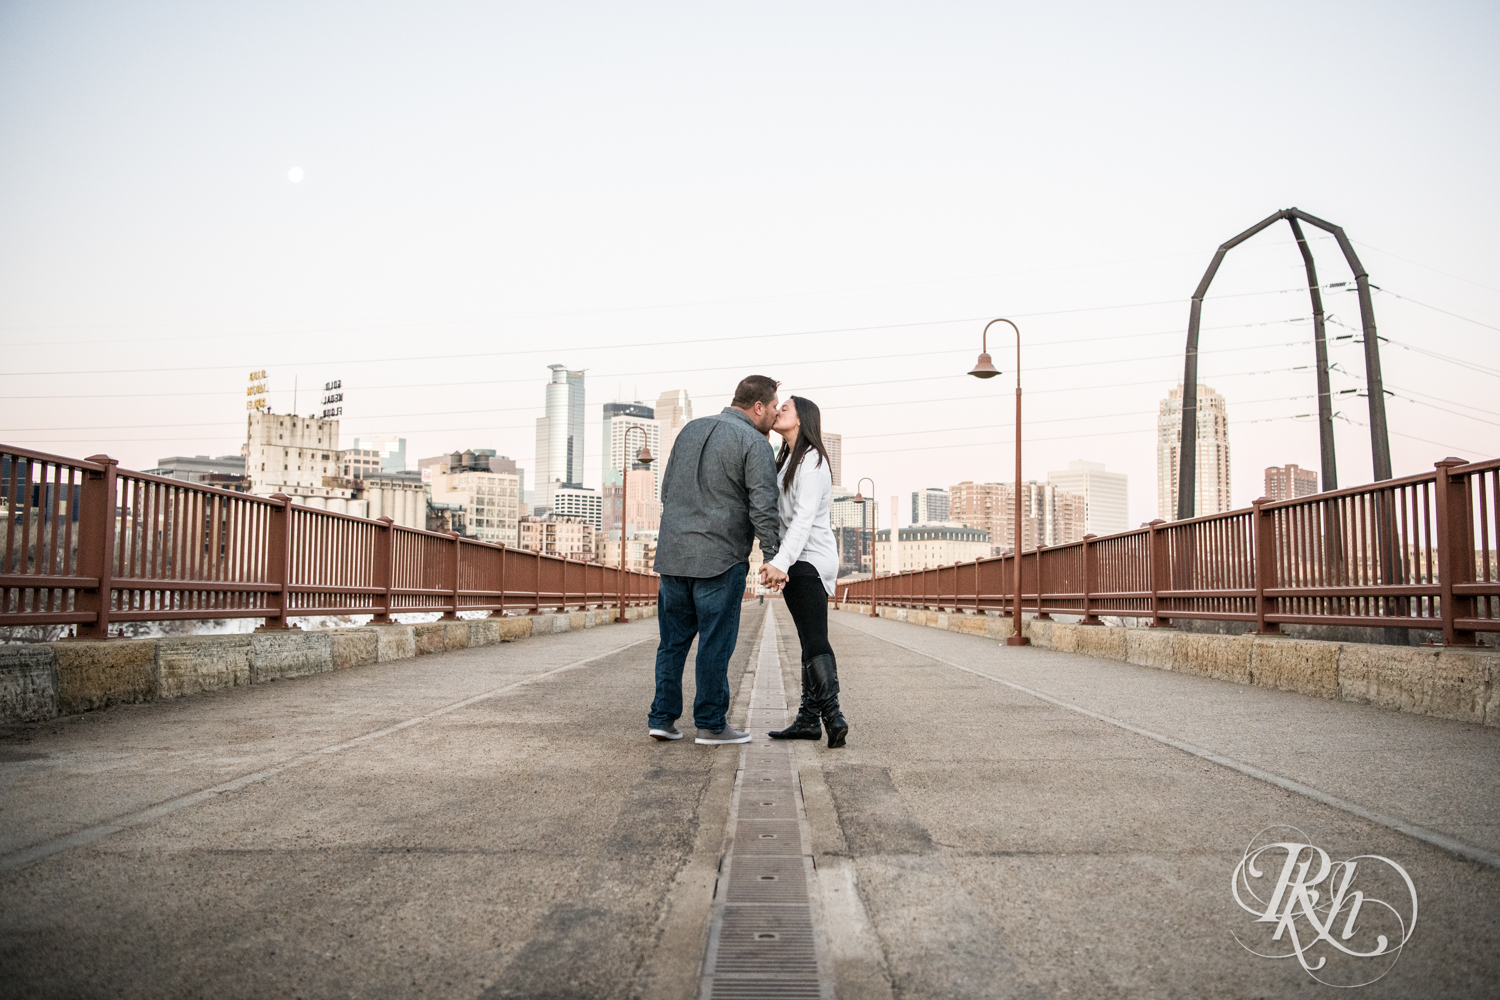 Man and woman kiss on the Stone Arch Bridge in Minneapolis, Minnesota at sunrise.